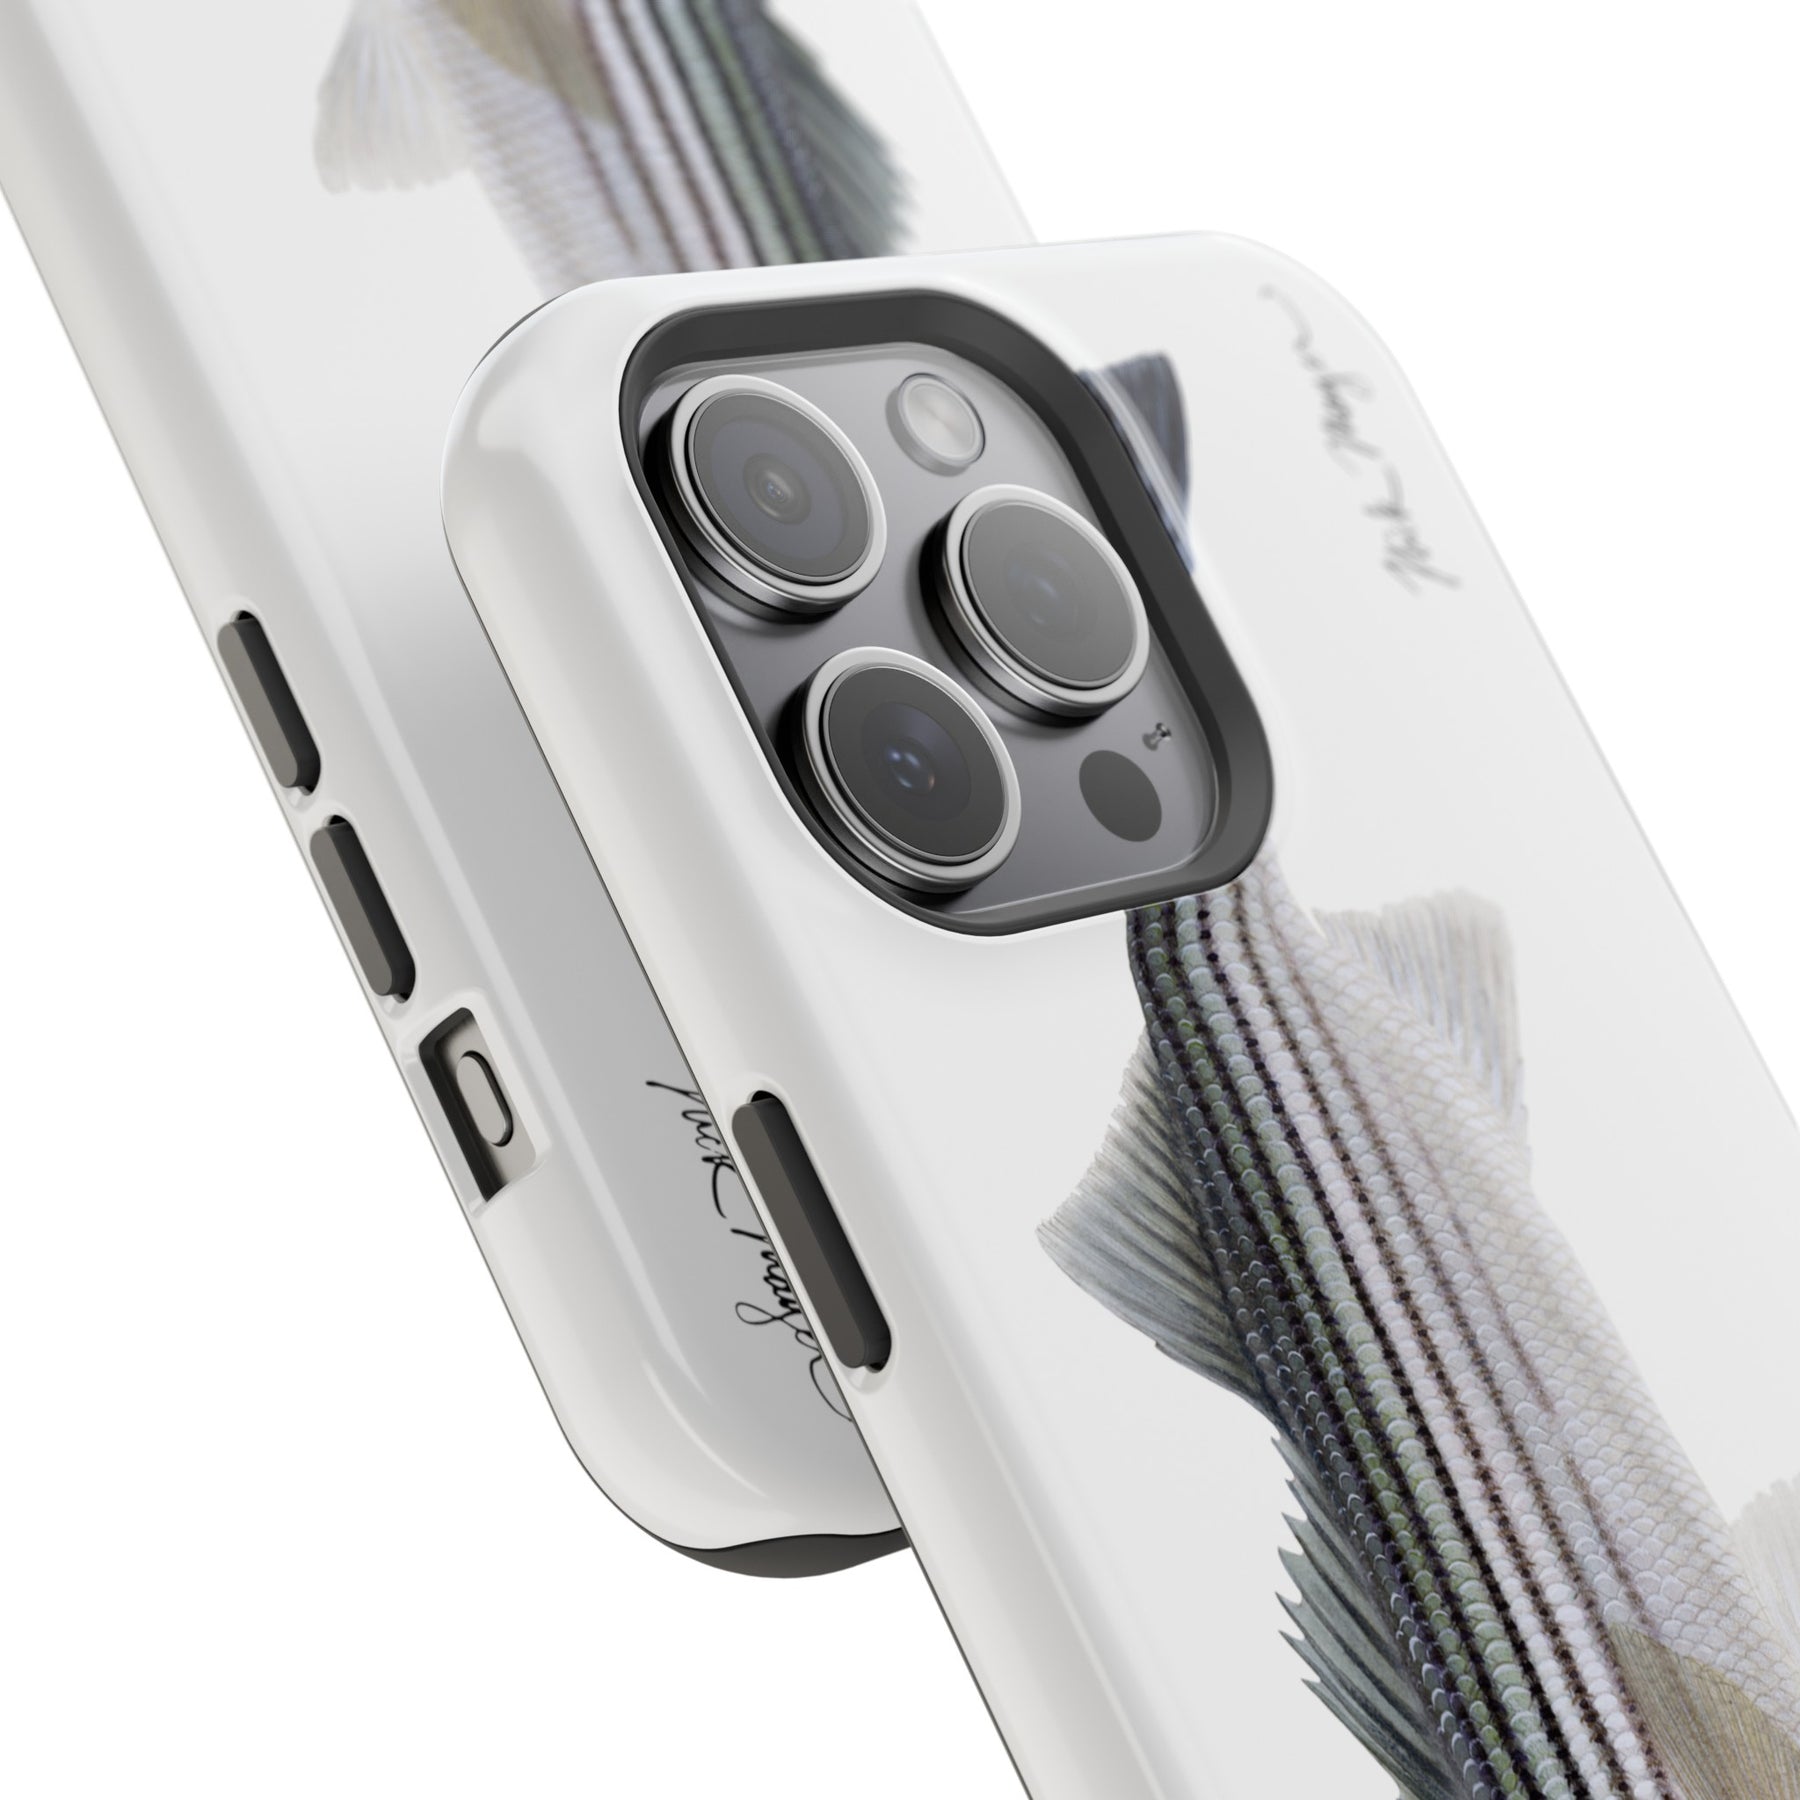 Schoolie Striper MagSafe iPhone Case